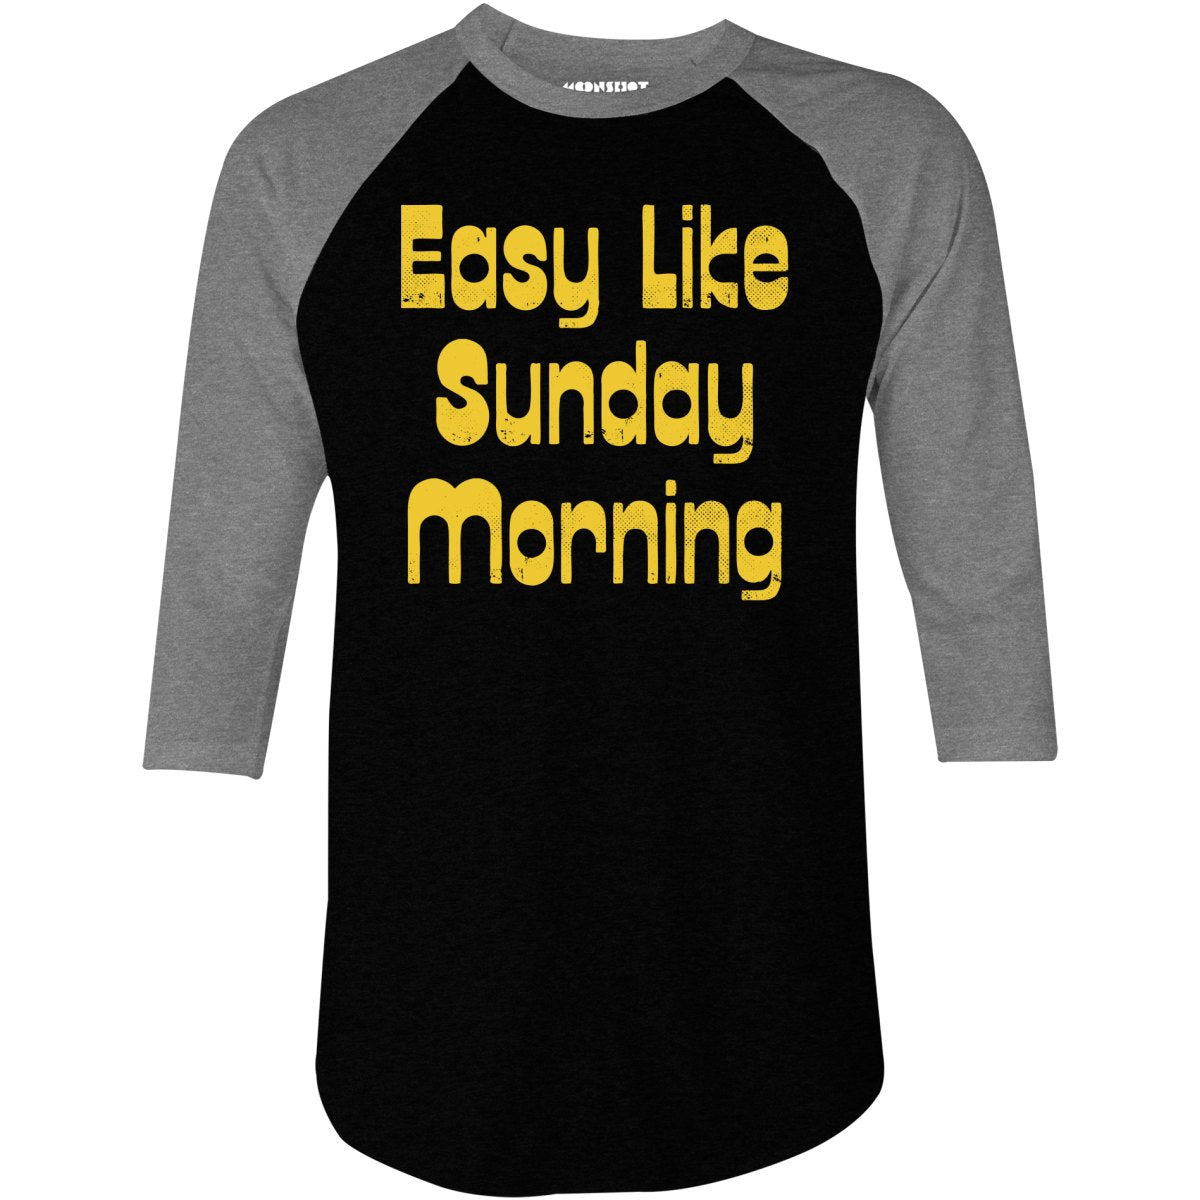 Easy Like Sunday Morning - 3/4 Sleeve Raglan T-Shirt